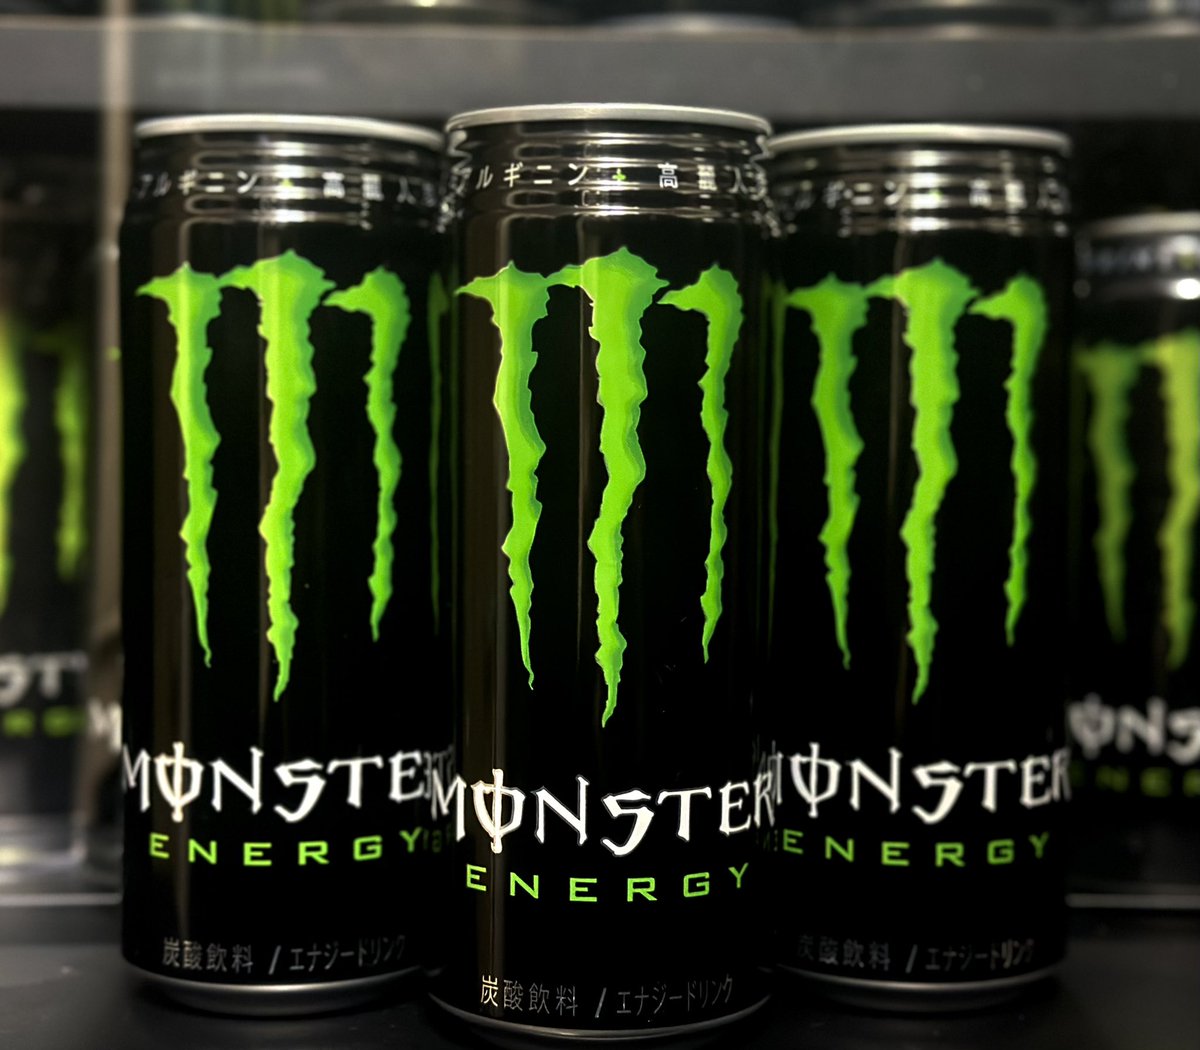 Monster energy JP 500ml can🇯🇵

ついに発売！ #500ml缶登場！

 #モンスターエナジー #エナジードリンク #Monsterenergy #energydrink
#500ml缶登場 #MonsterEnergy